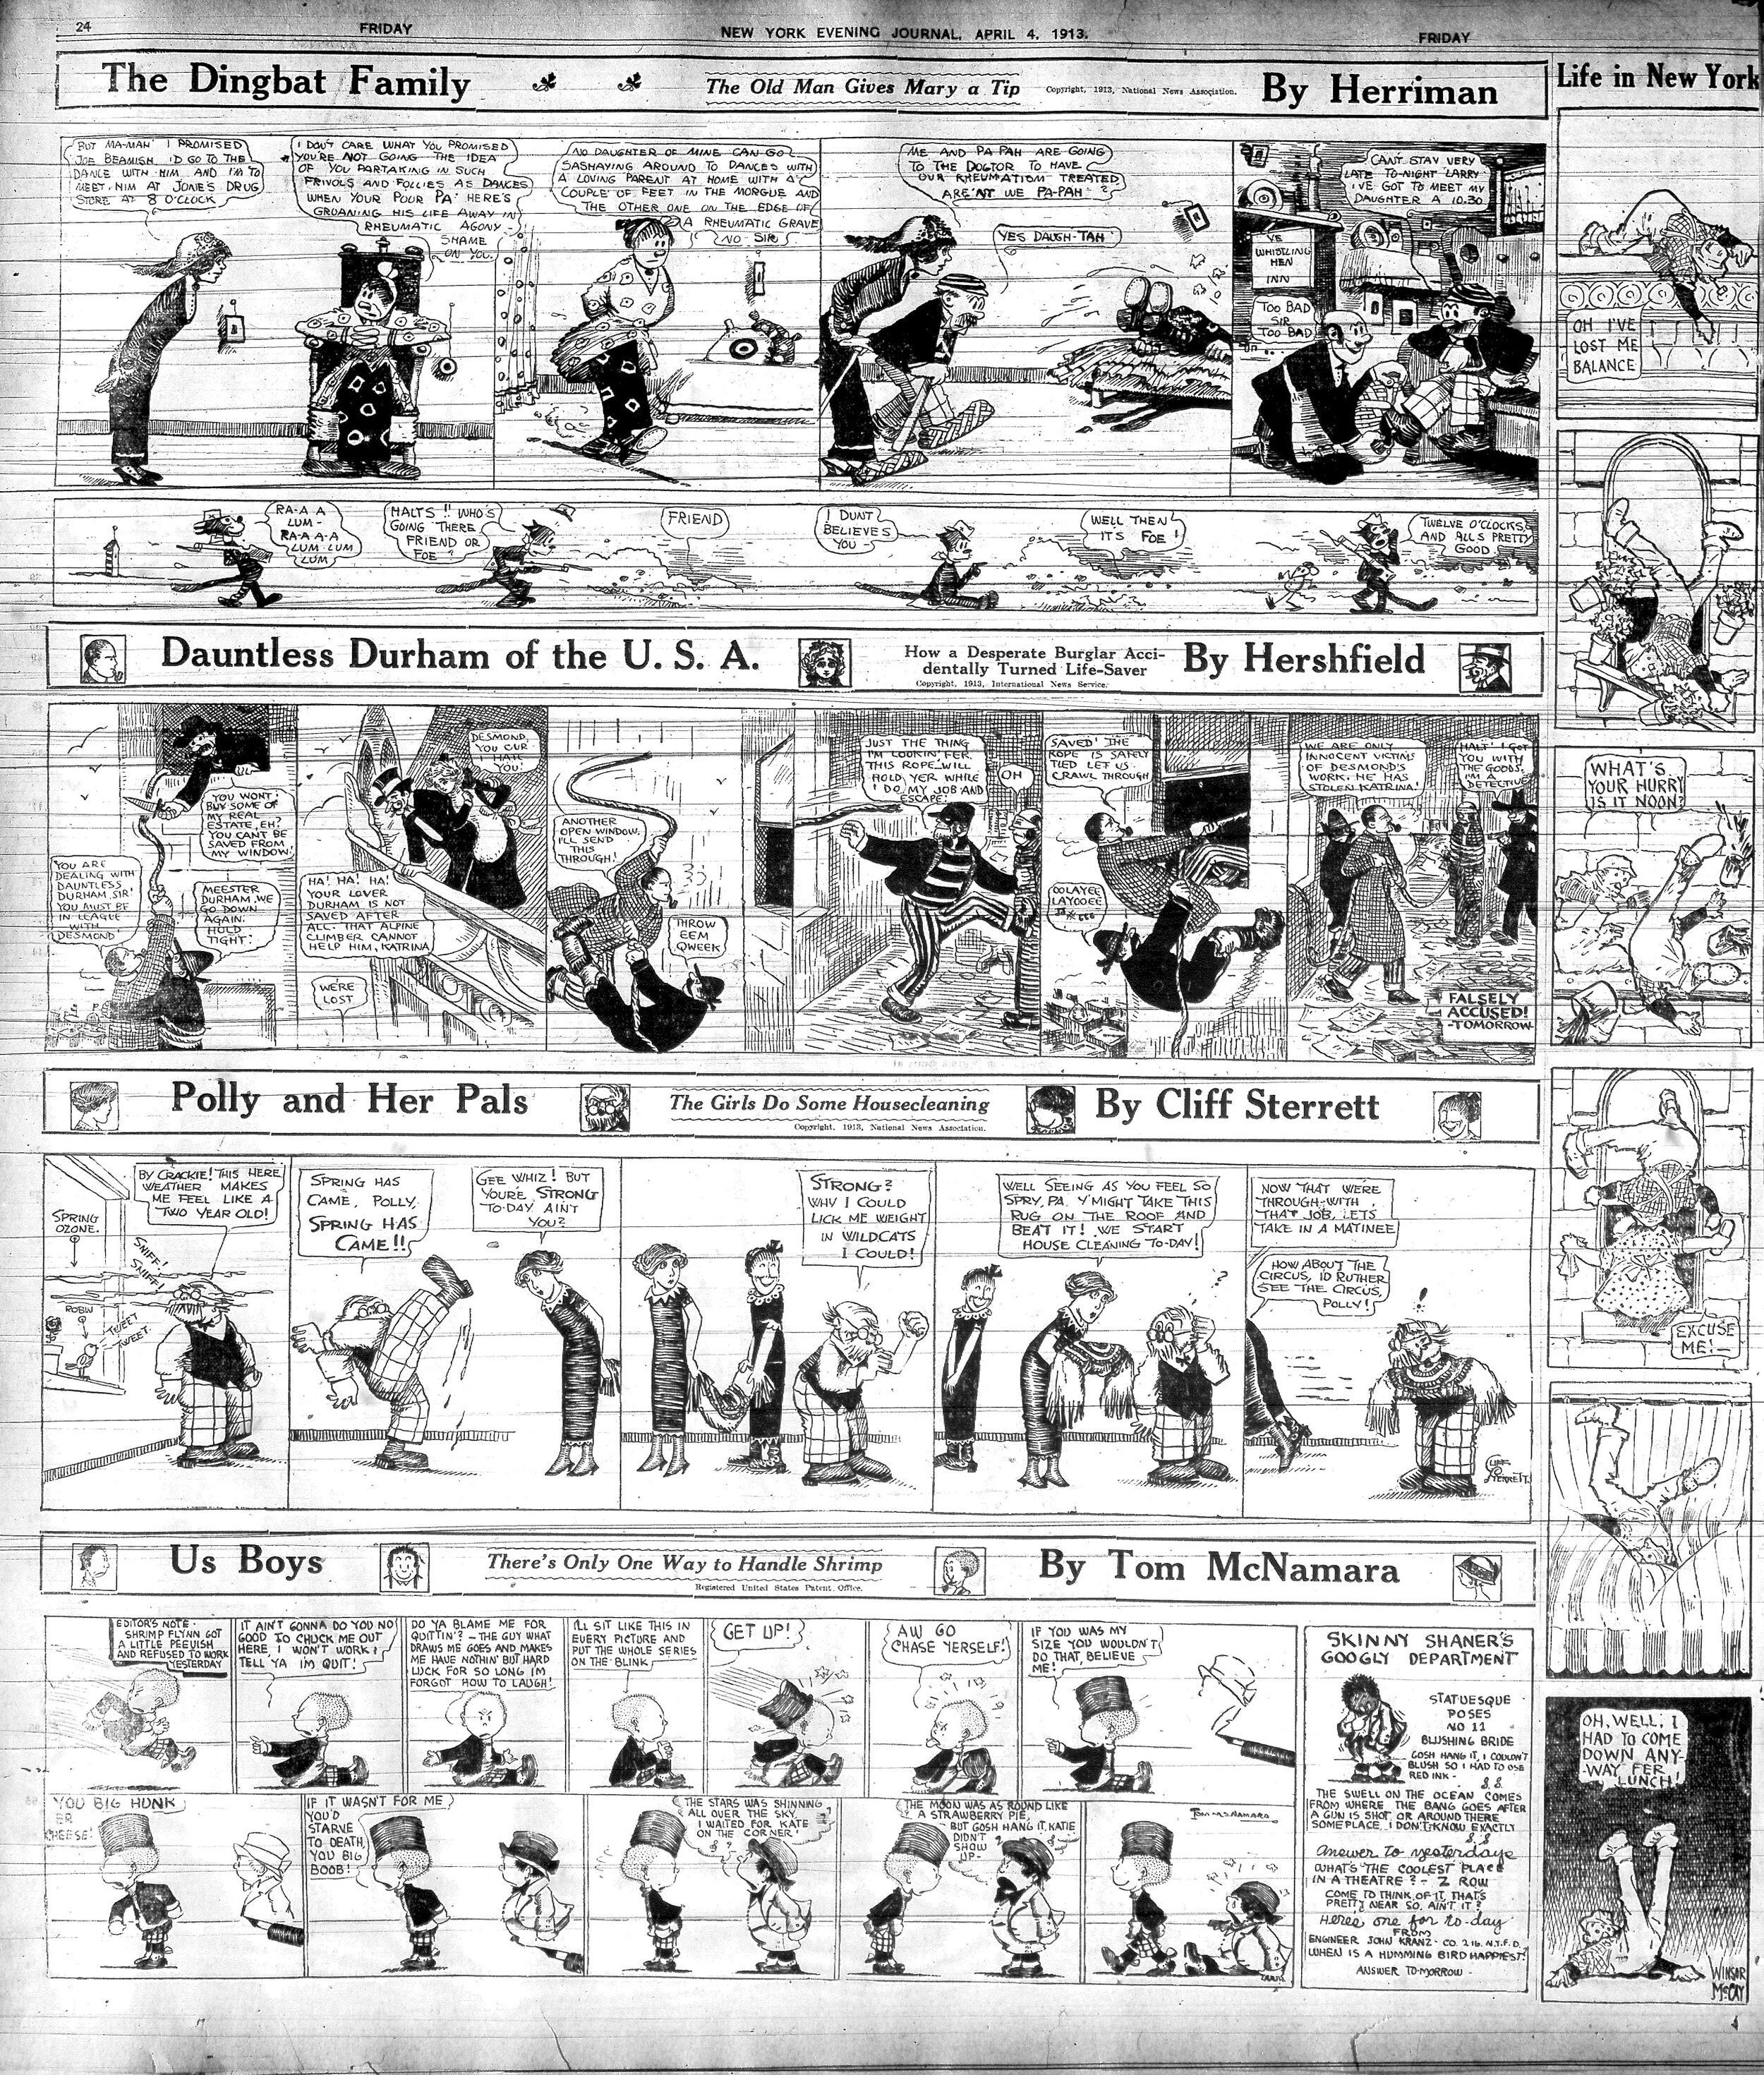 13-nyej-04-4-1913-comics-page.jpg